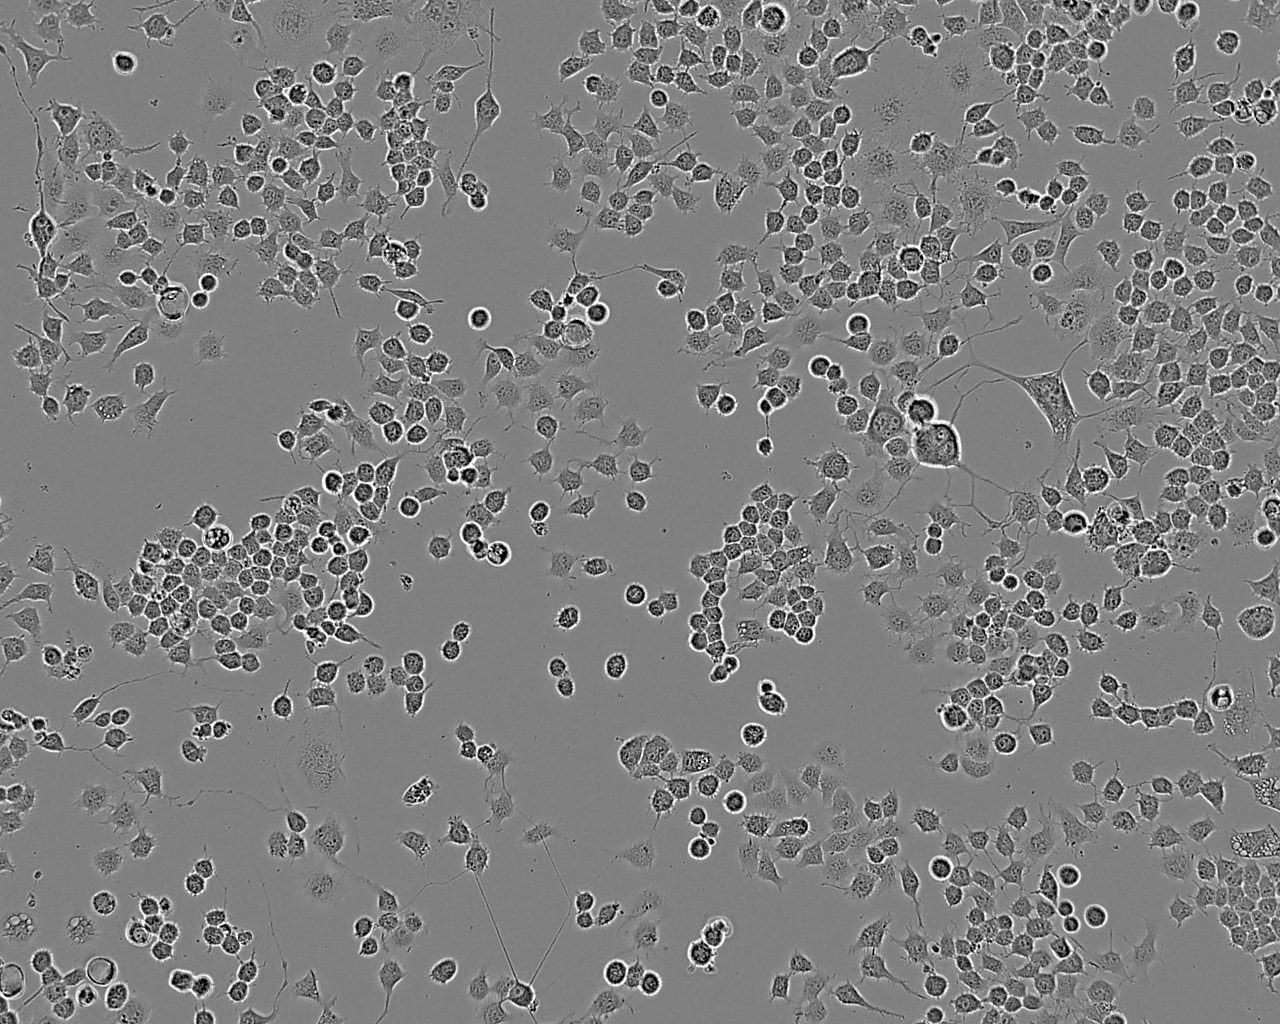 NCI-H441 Cells|人肺腺癌细胞系,NCI-H441 Cells